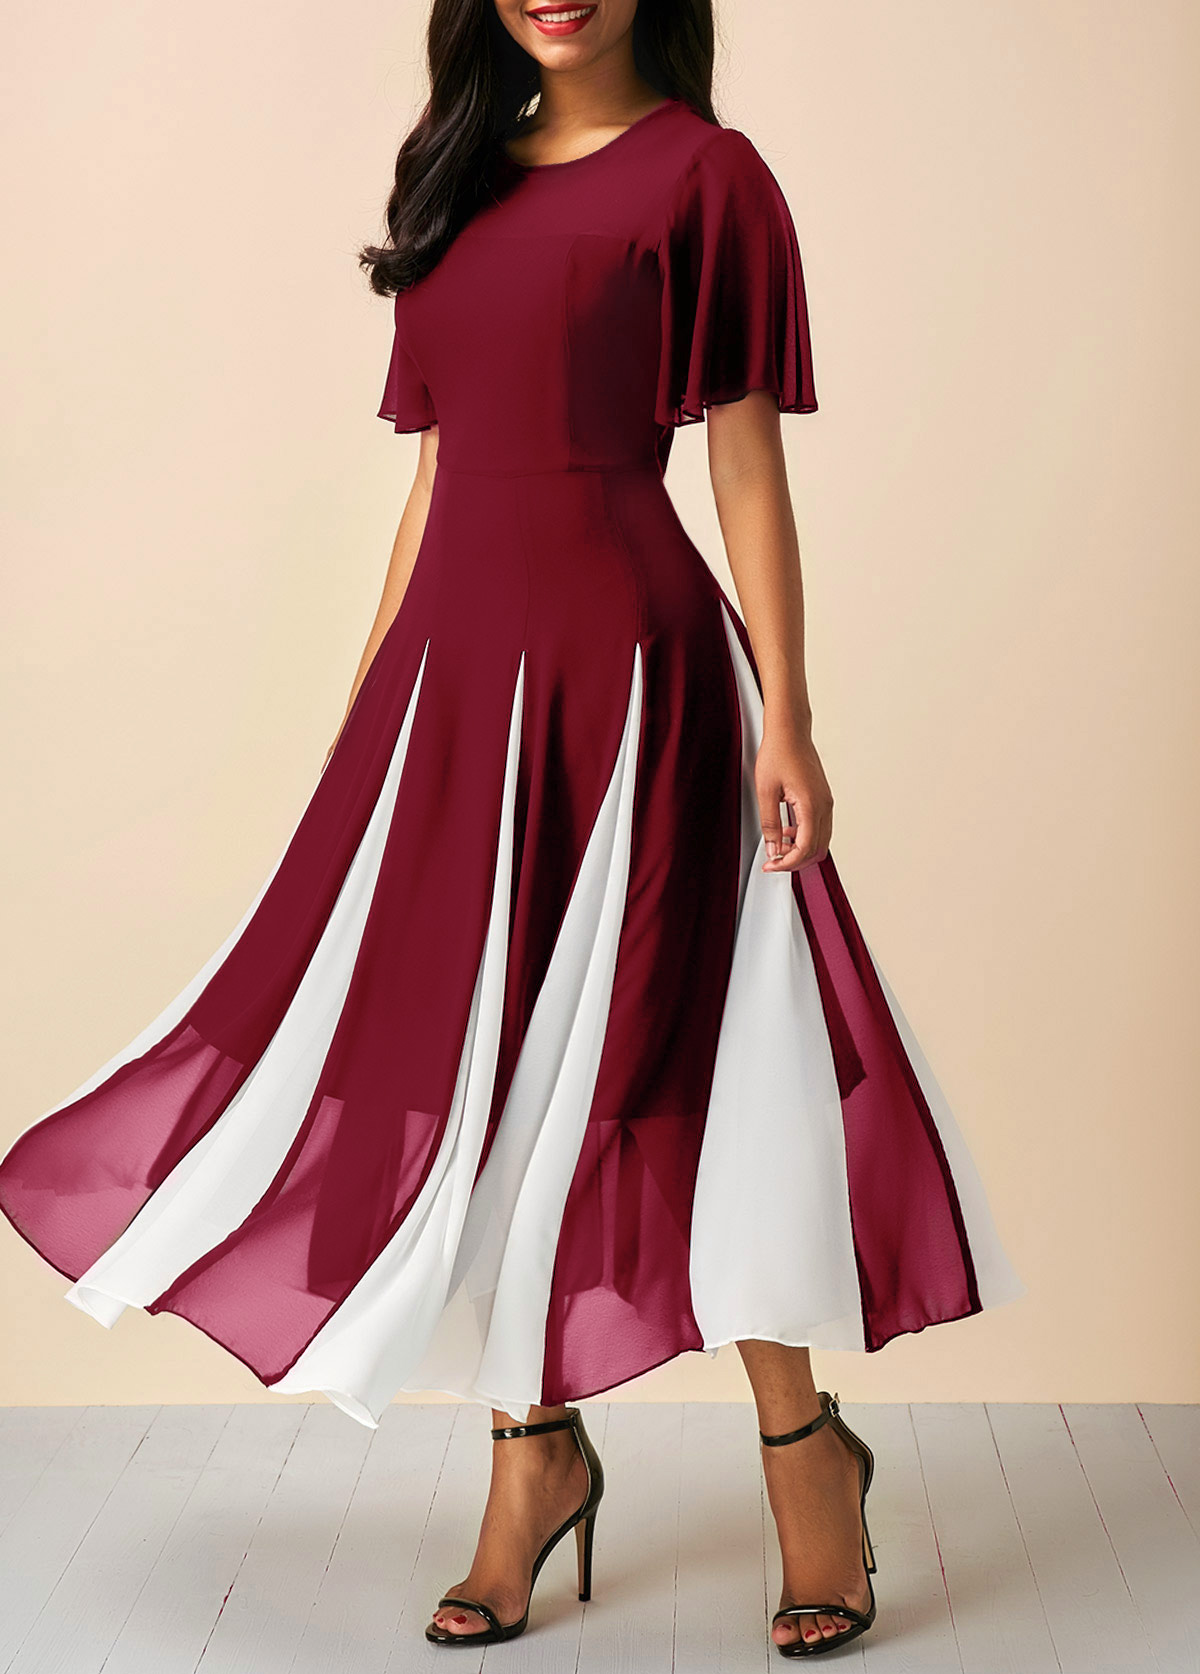 Wine Red Round Neck Short Sleeve Chiffon Dress